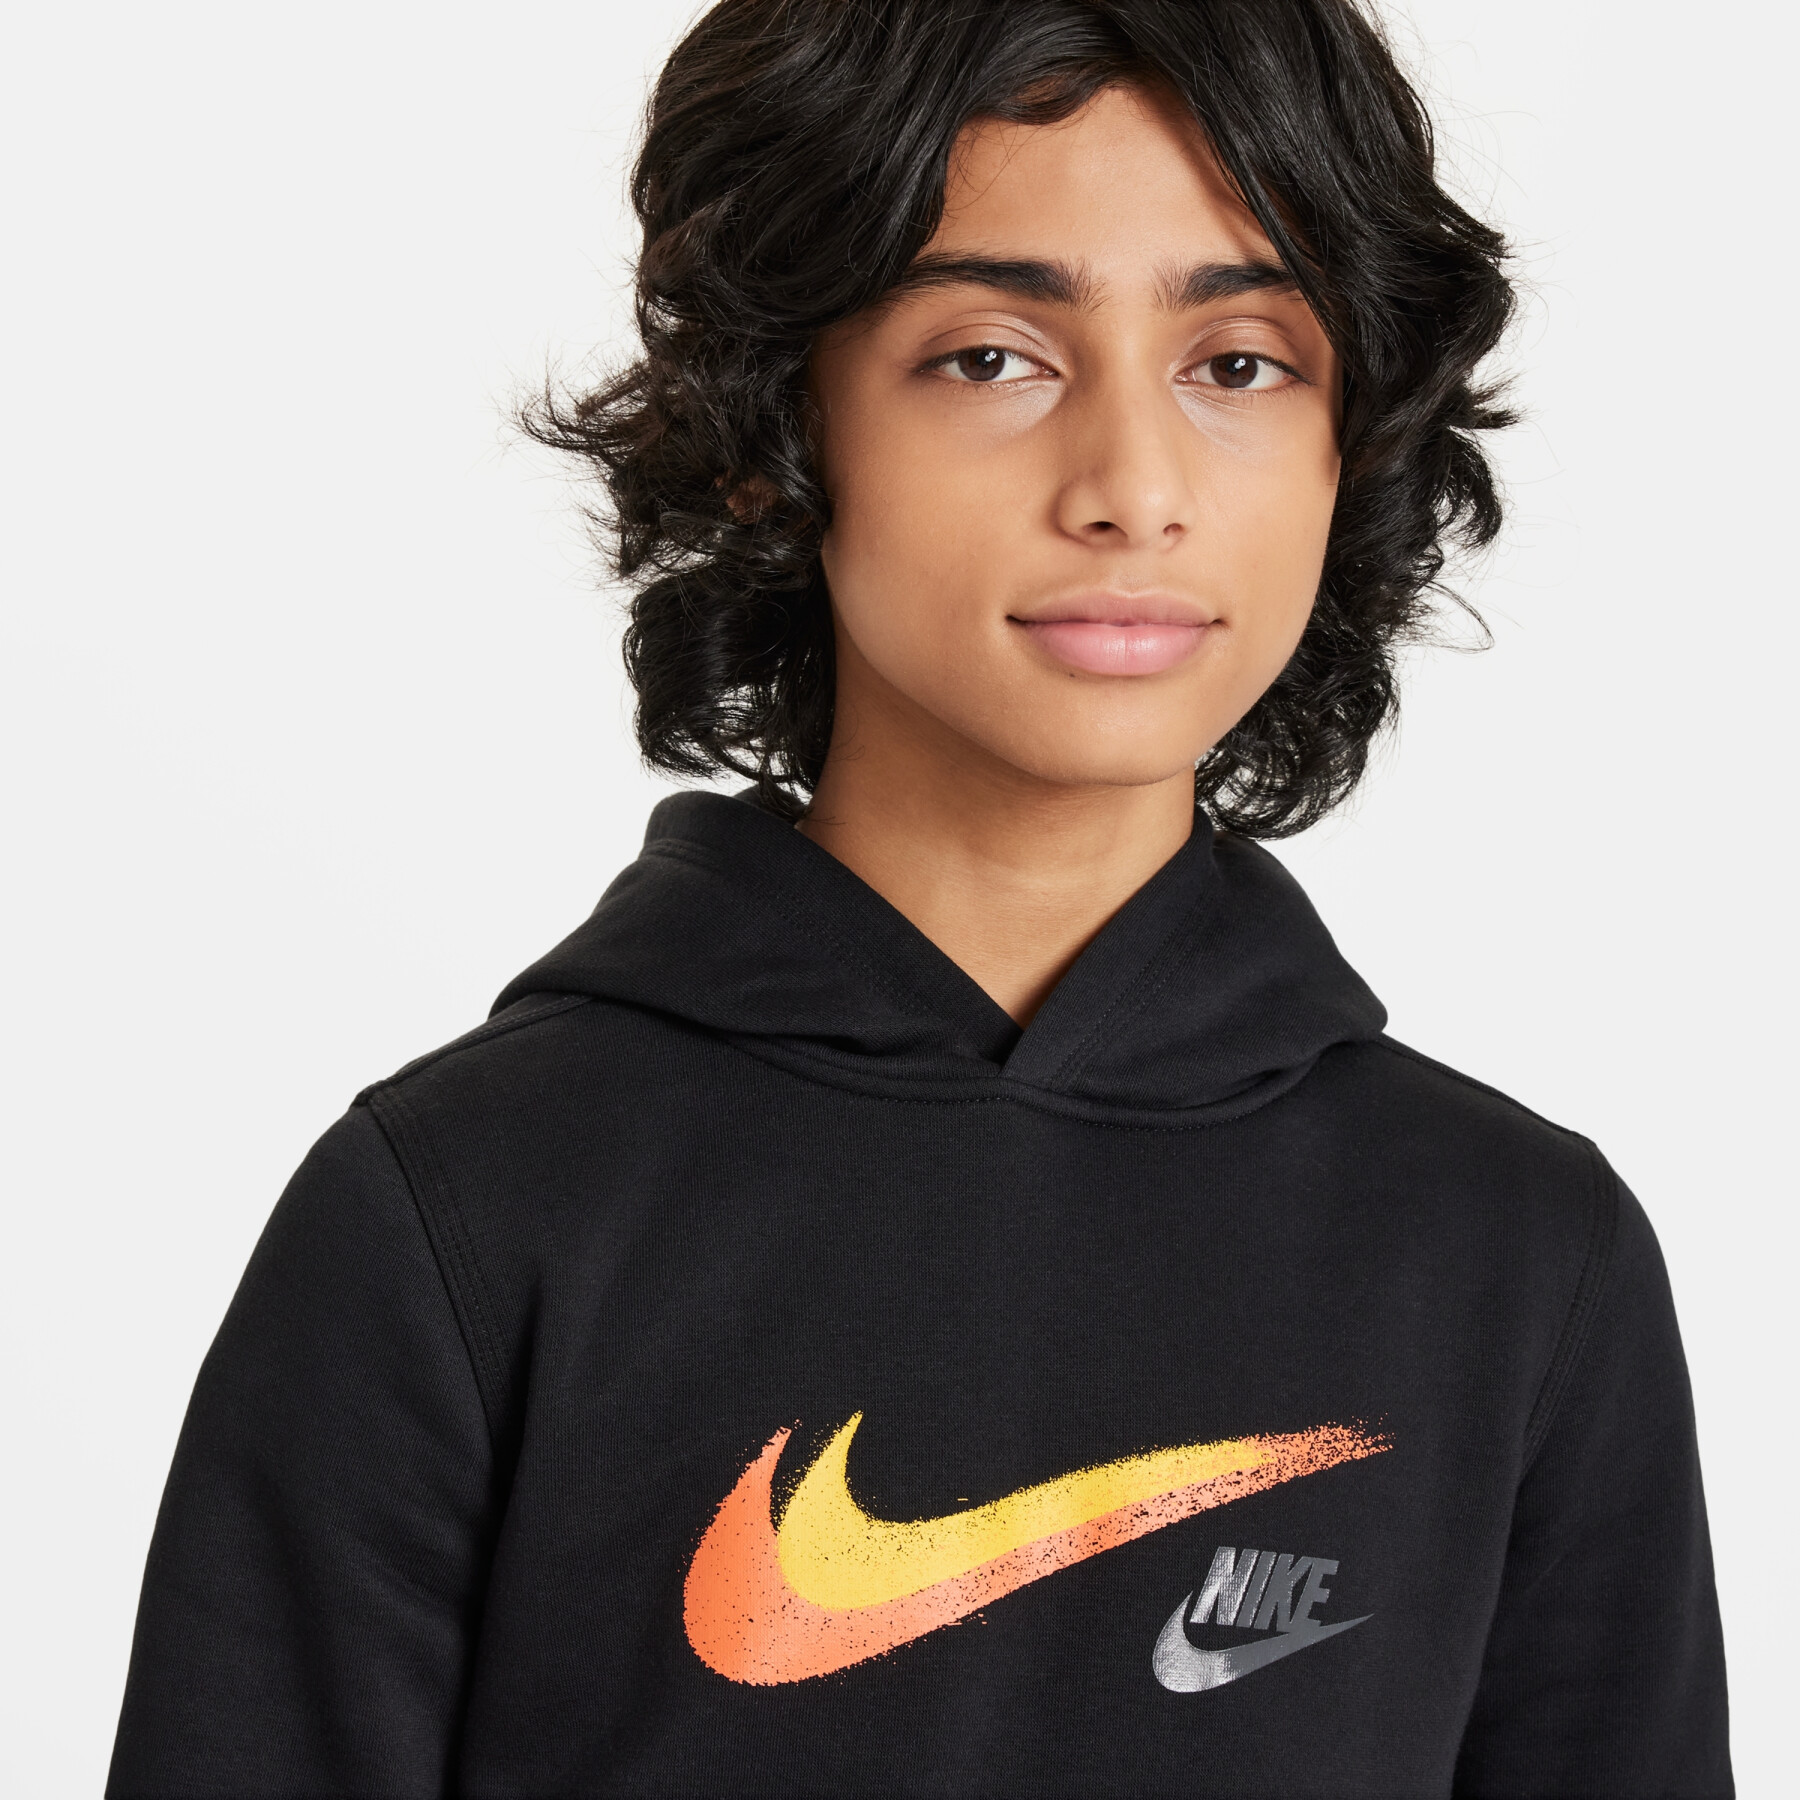 Sweatshirt à capuche enfant Nike Fleece